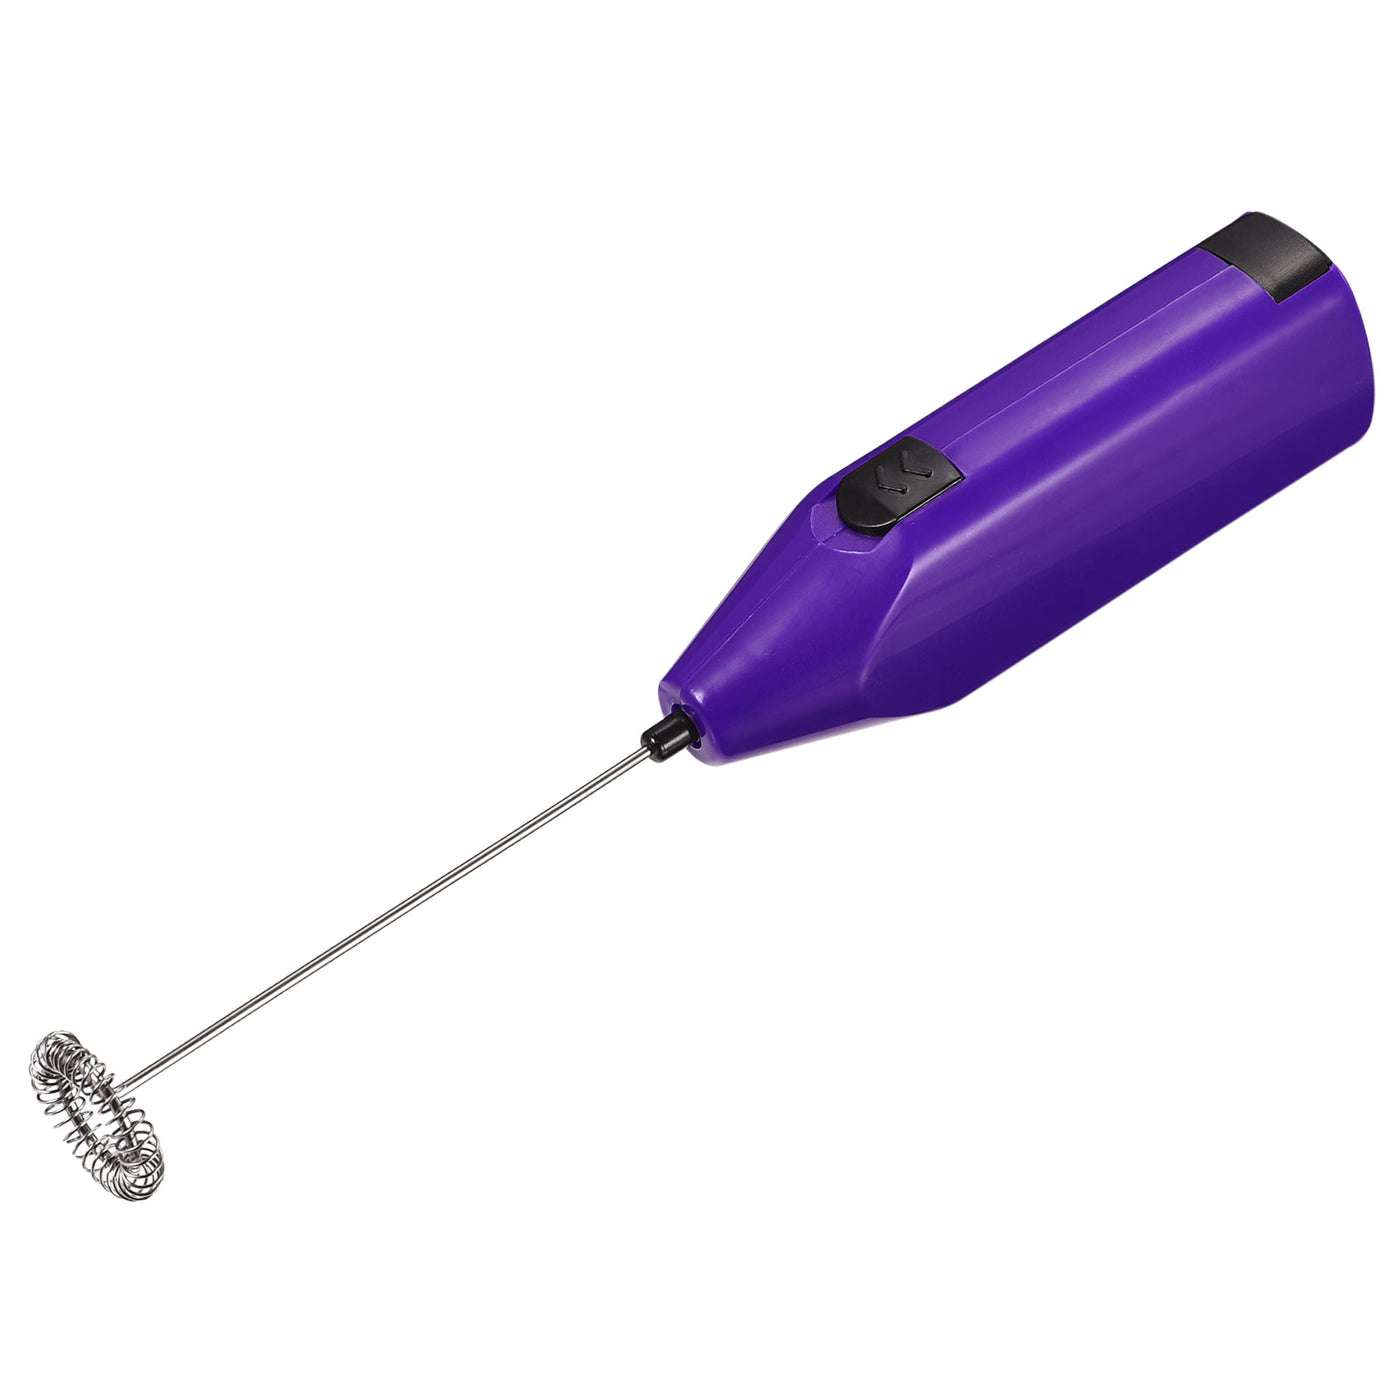 Harfington Electric Tumbler Stirrer, Handheld Mini Mixer Battery Operated Stirring Mixing Purple for DIY Glitter Tumbler Cups